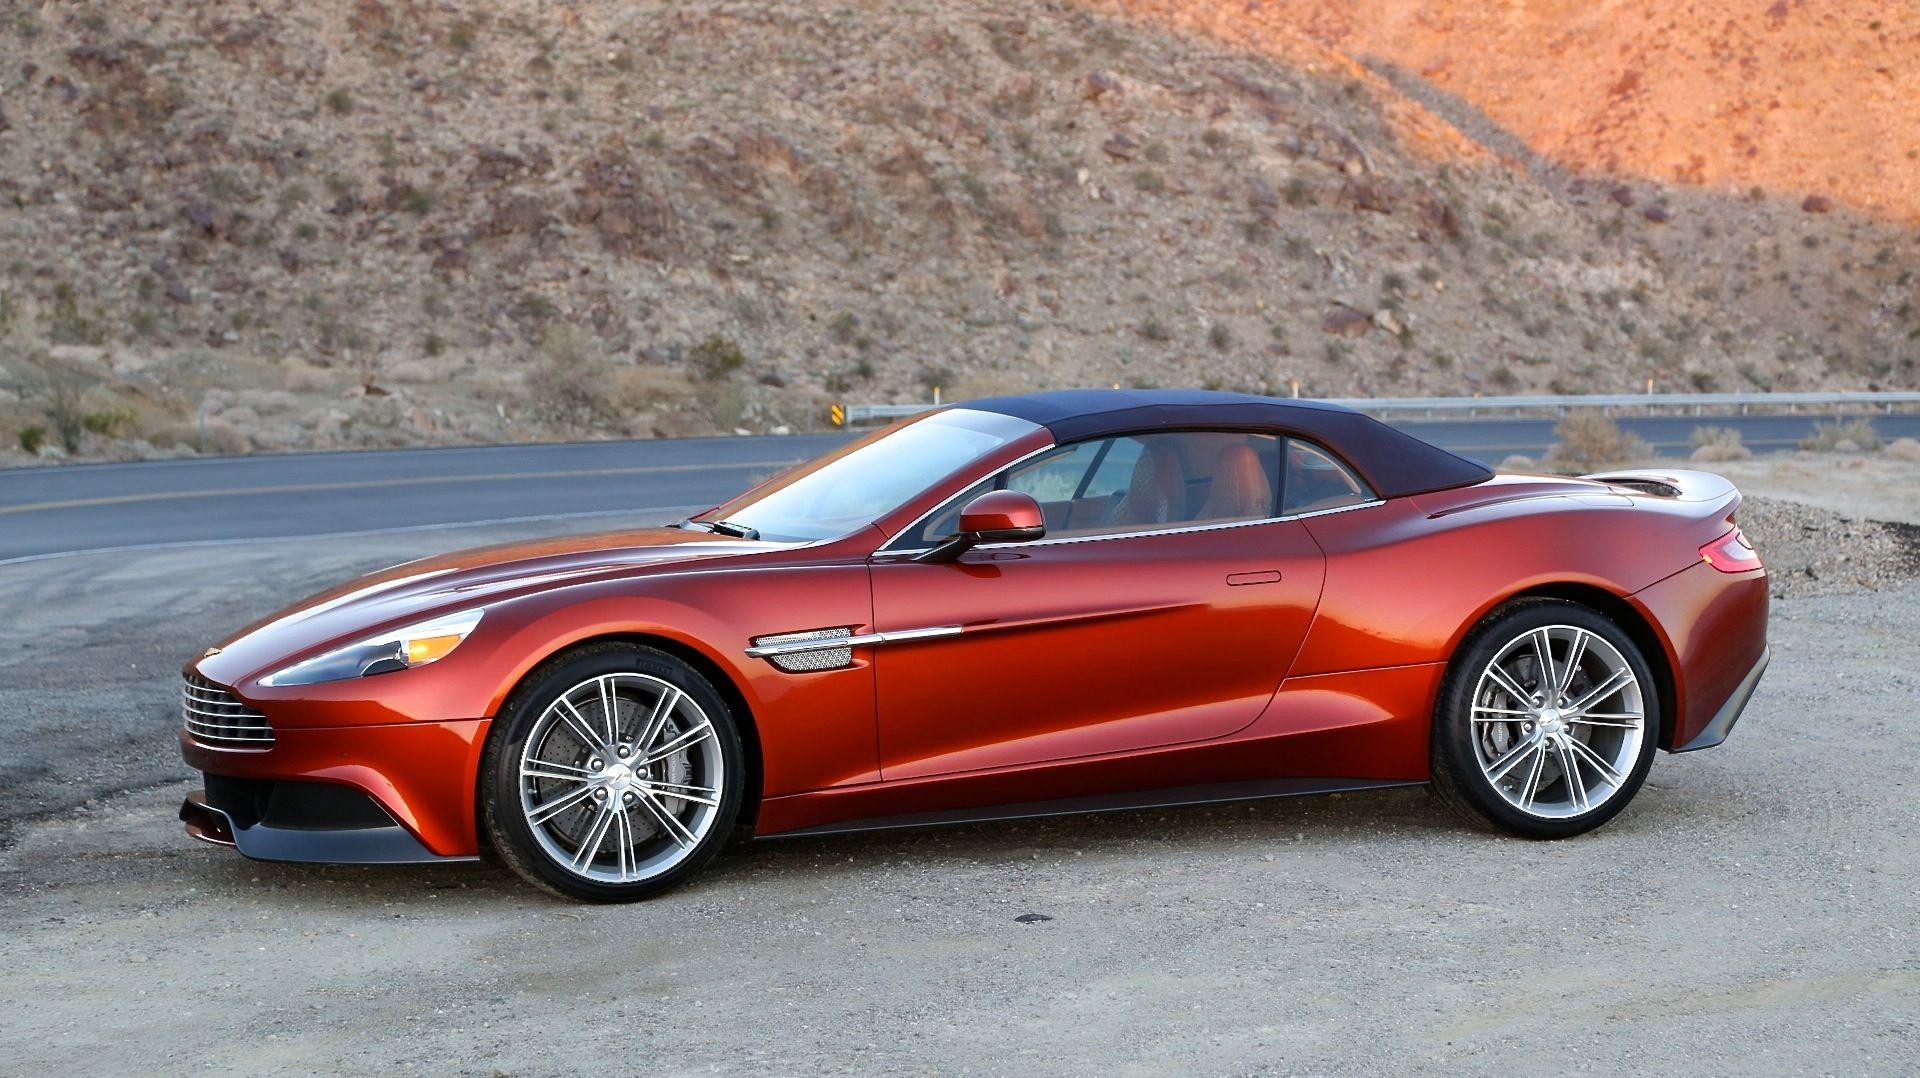 Aston Martin Vanquish Wallpaper. Full HD Picture